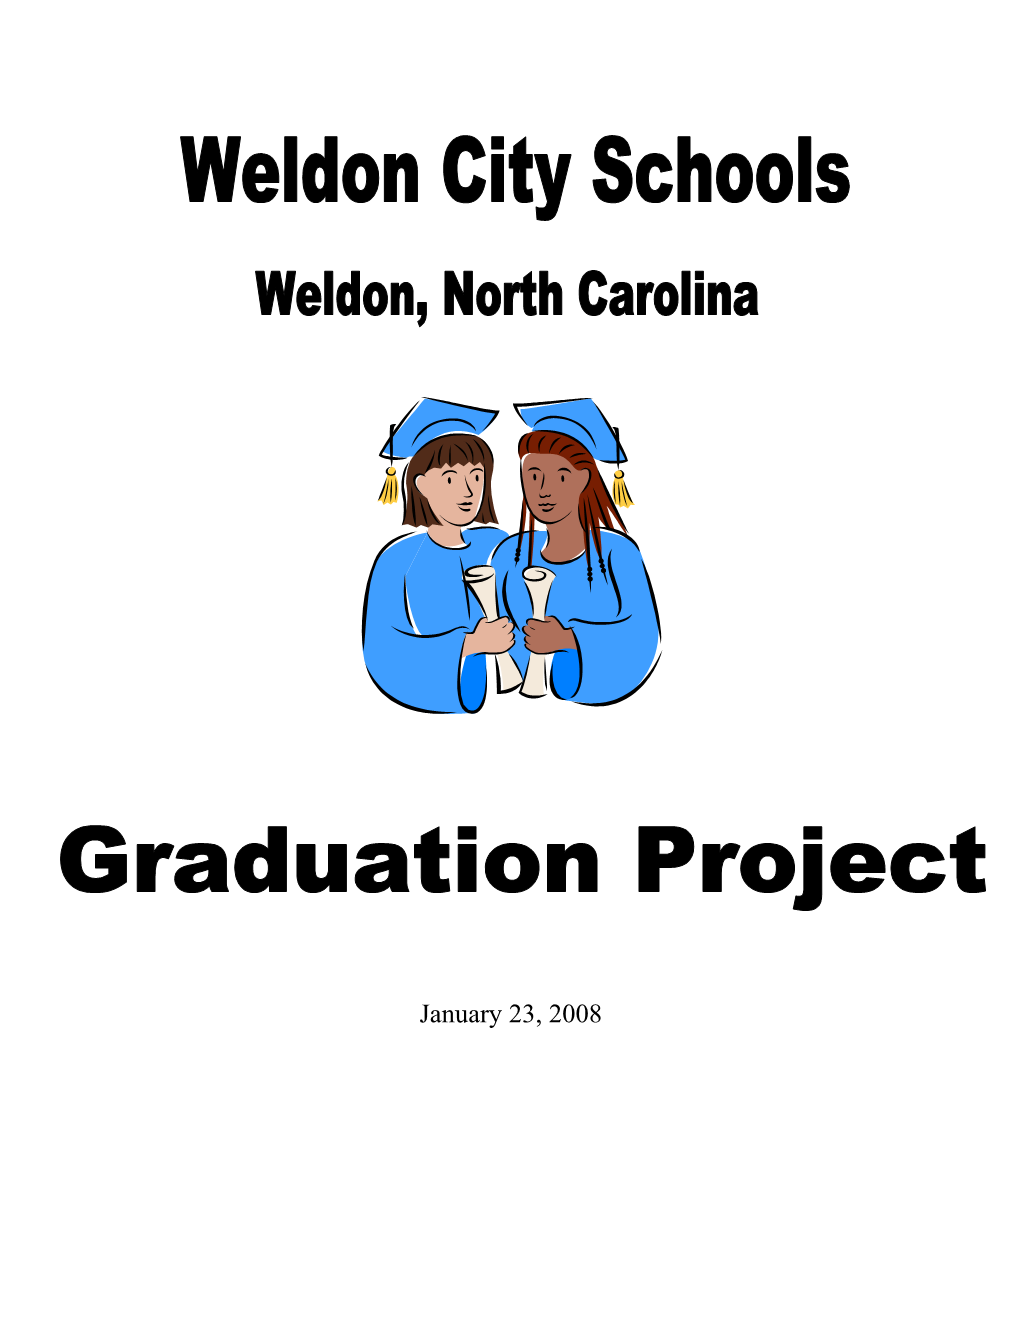 Weldon City Schools Graduation Project